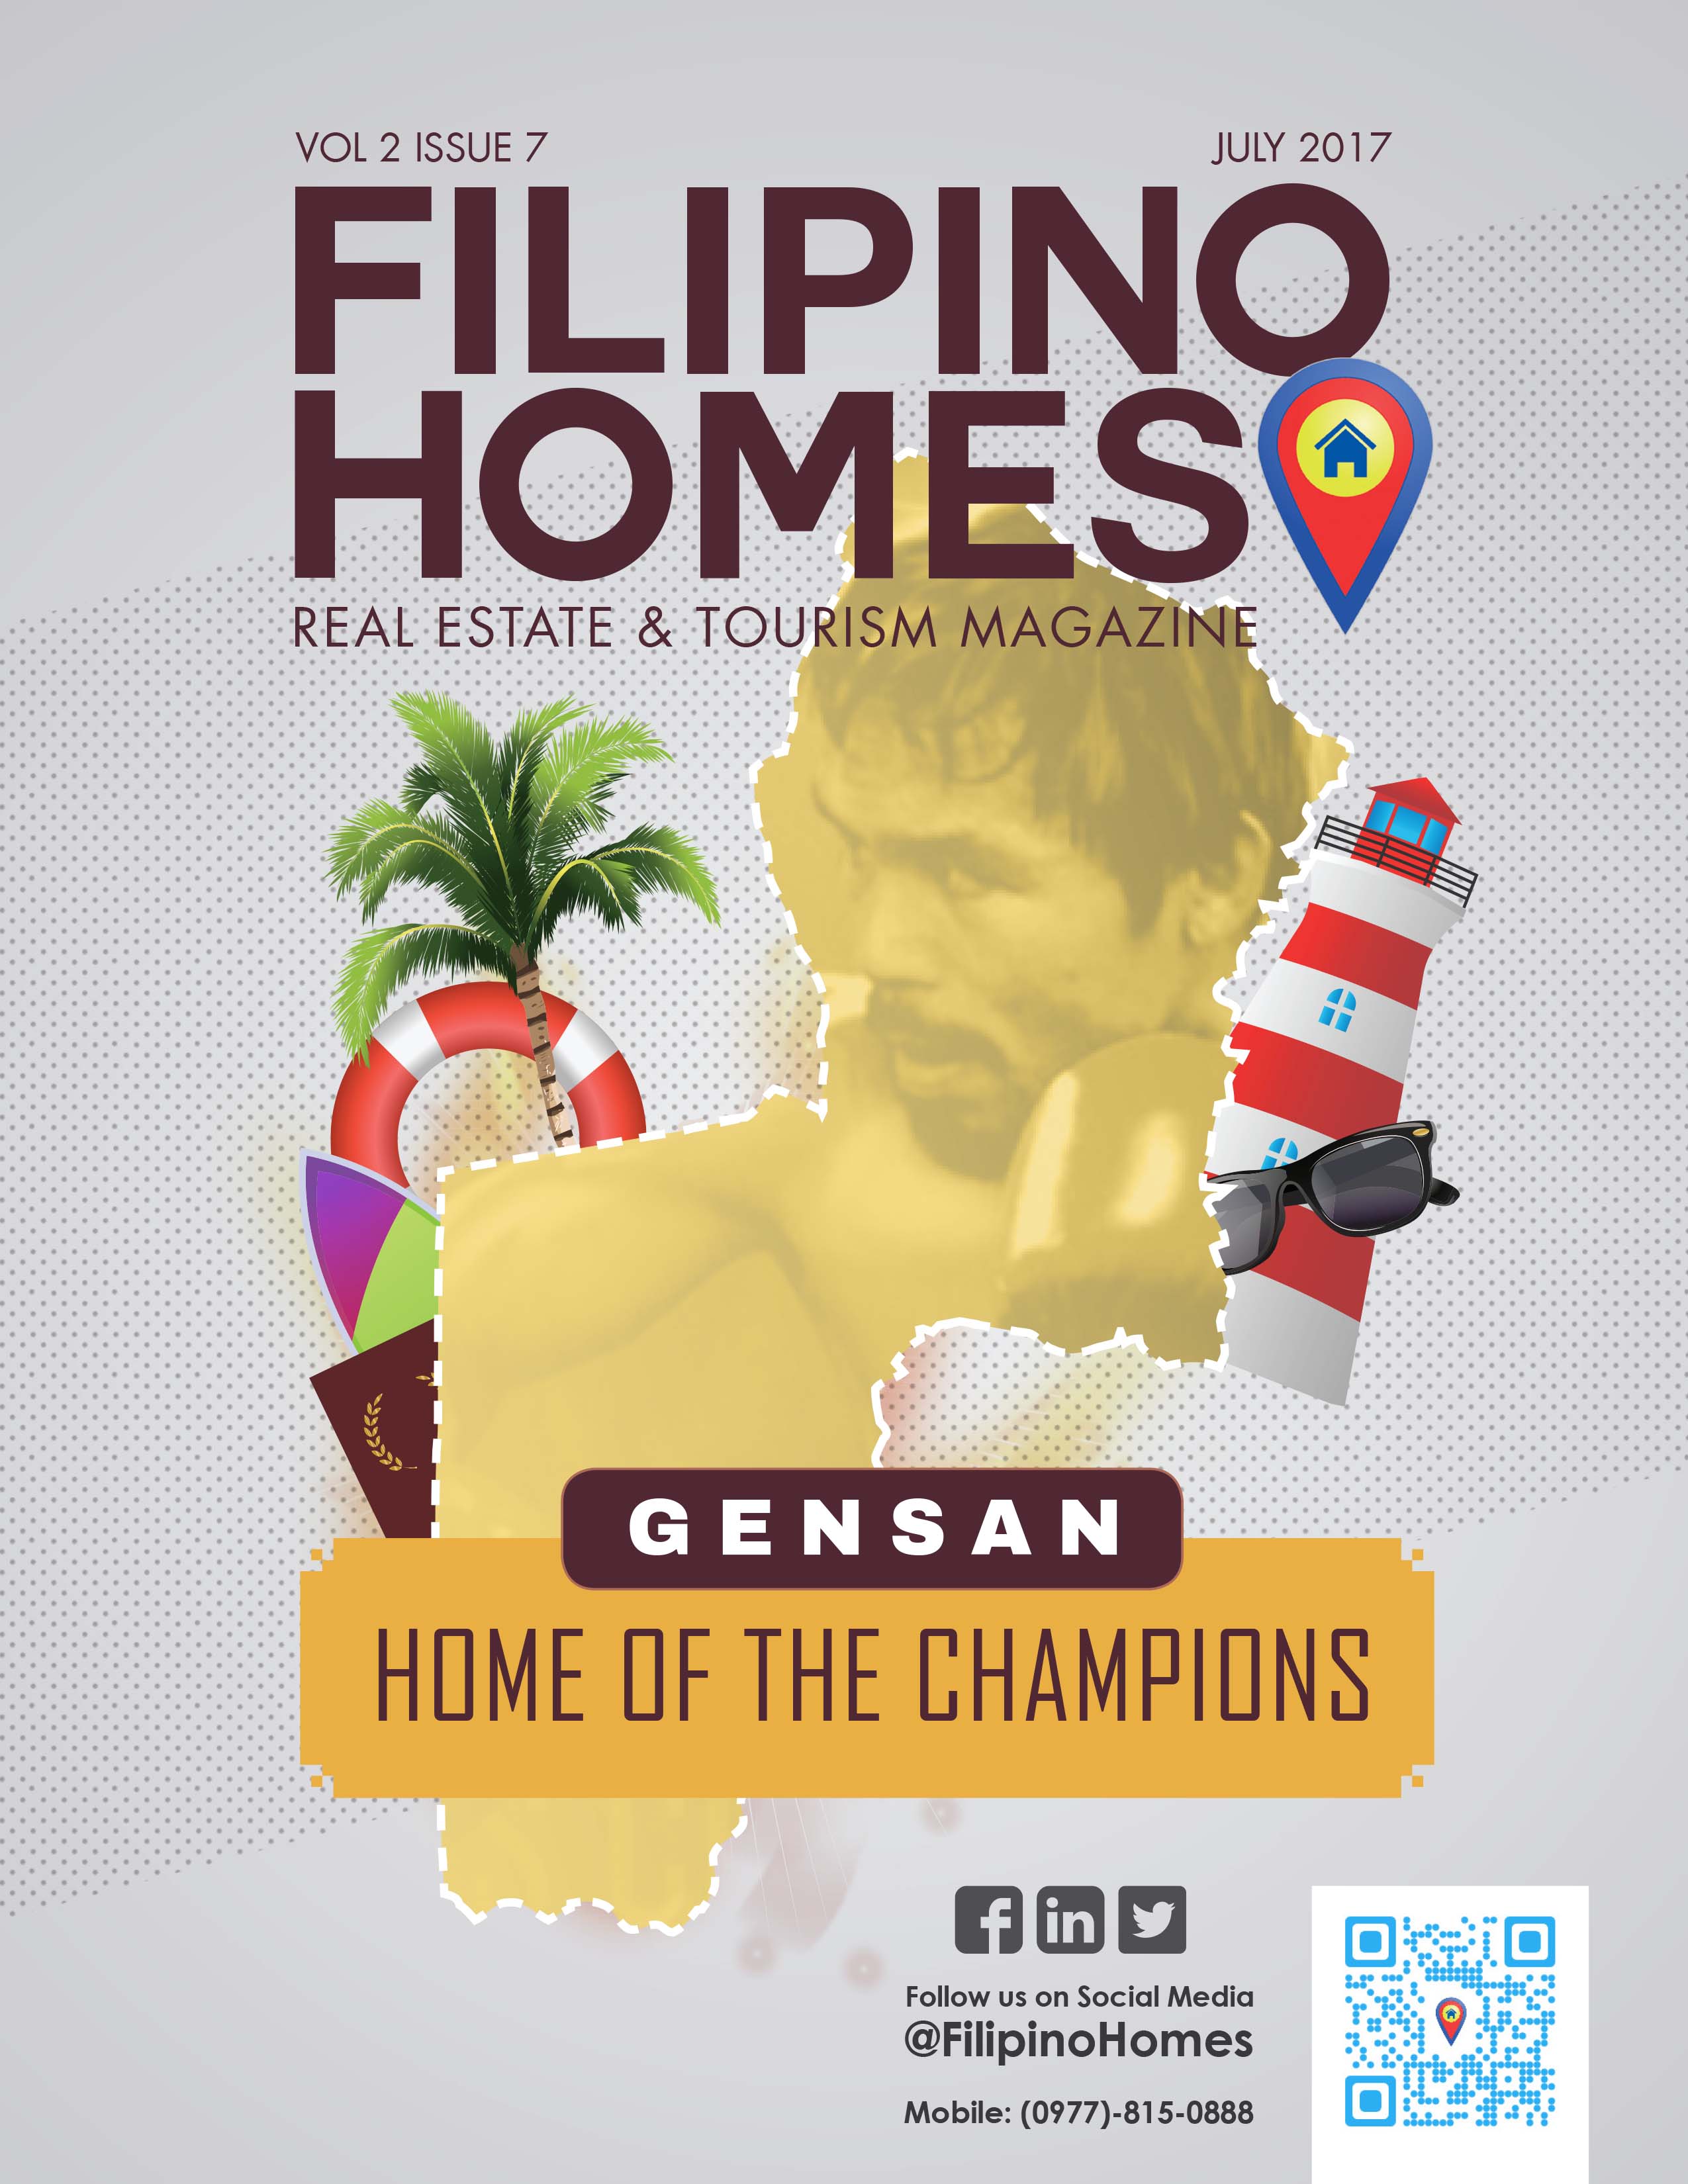 Filipino Homes Real Estate & Tourism Magazine: Gensan